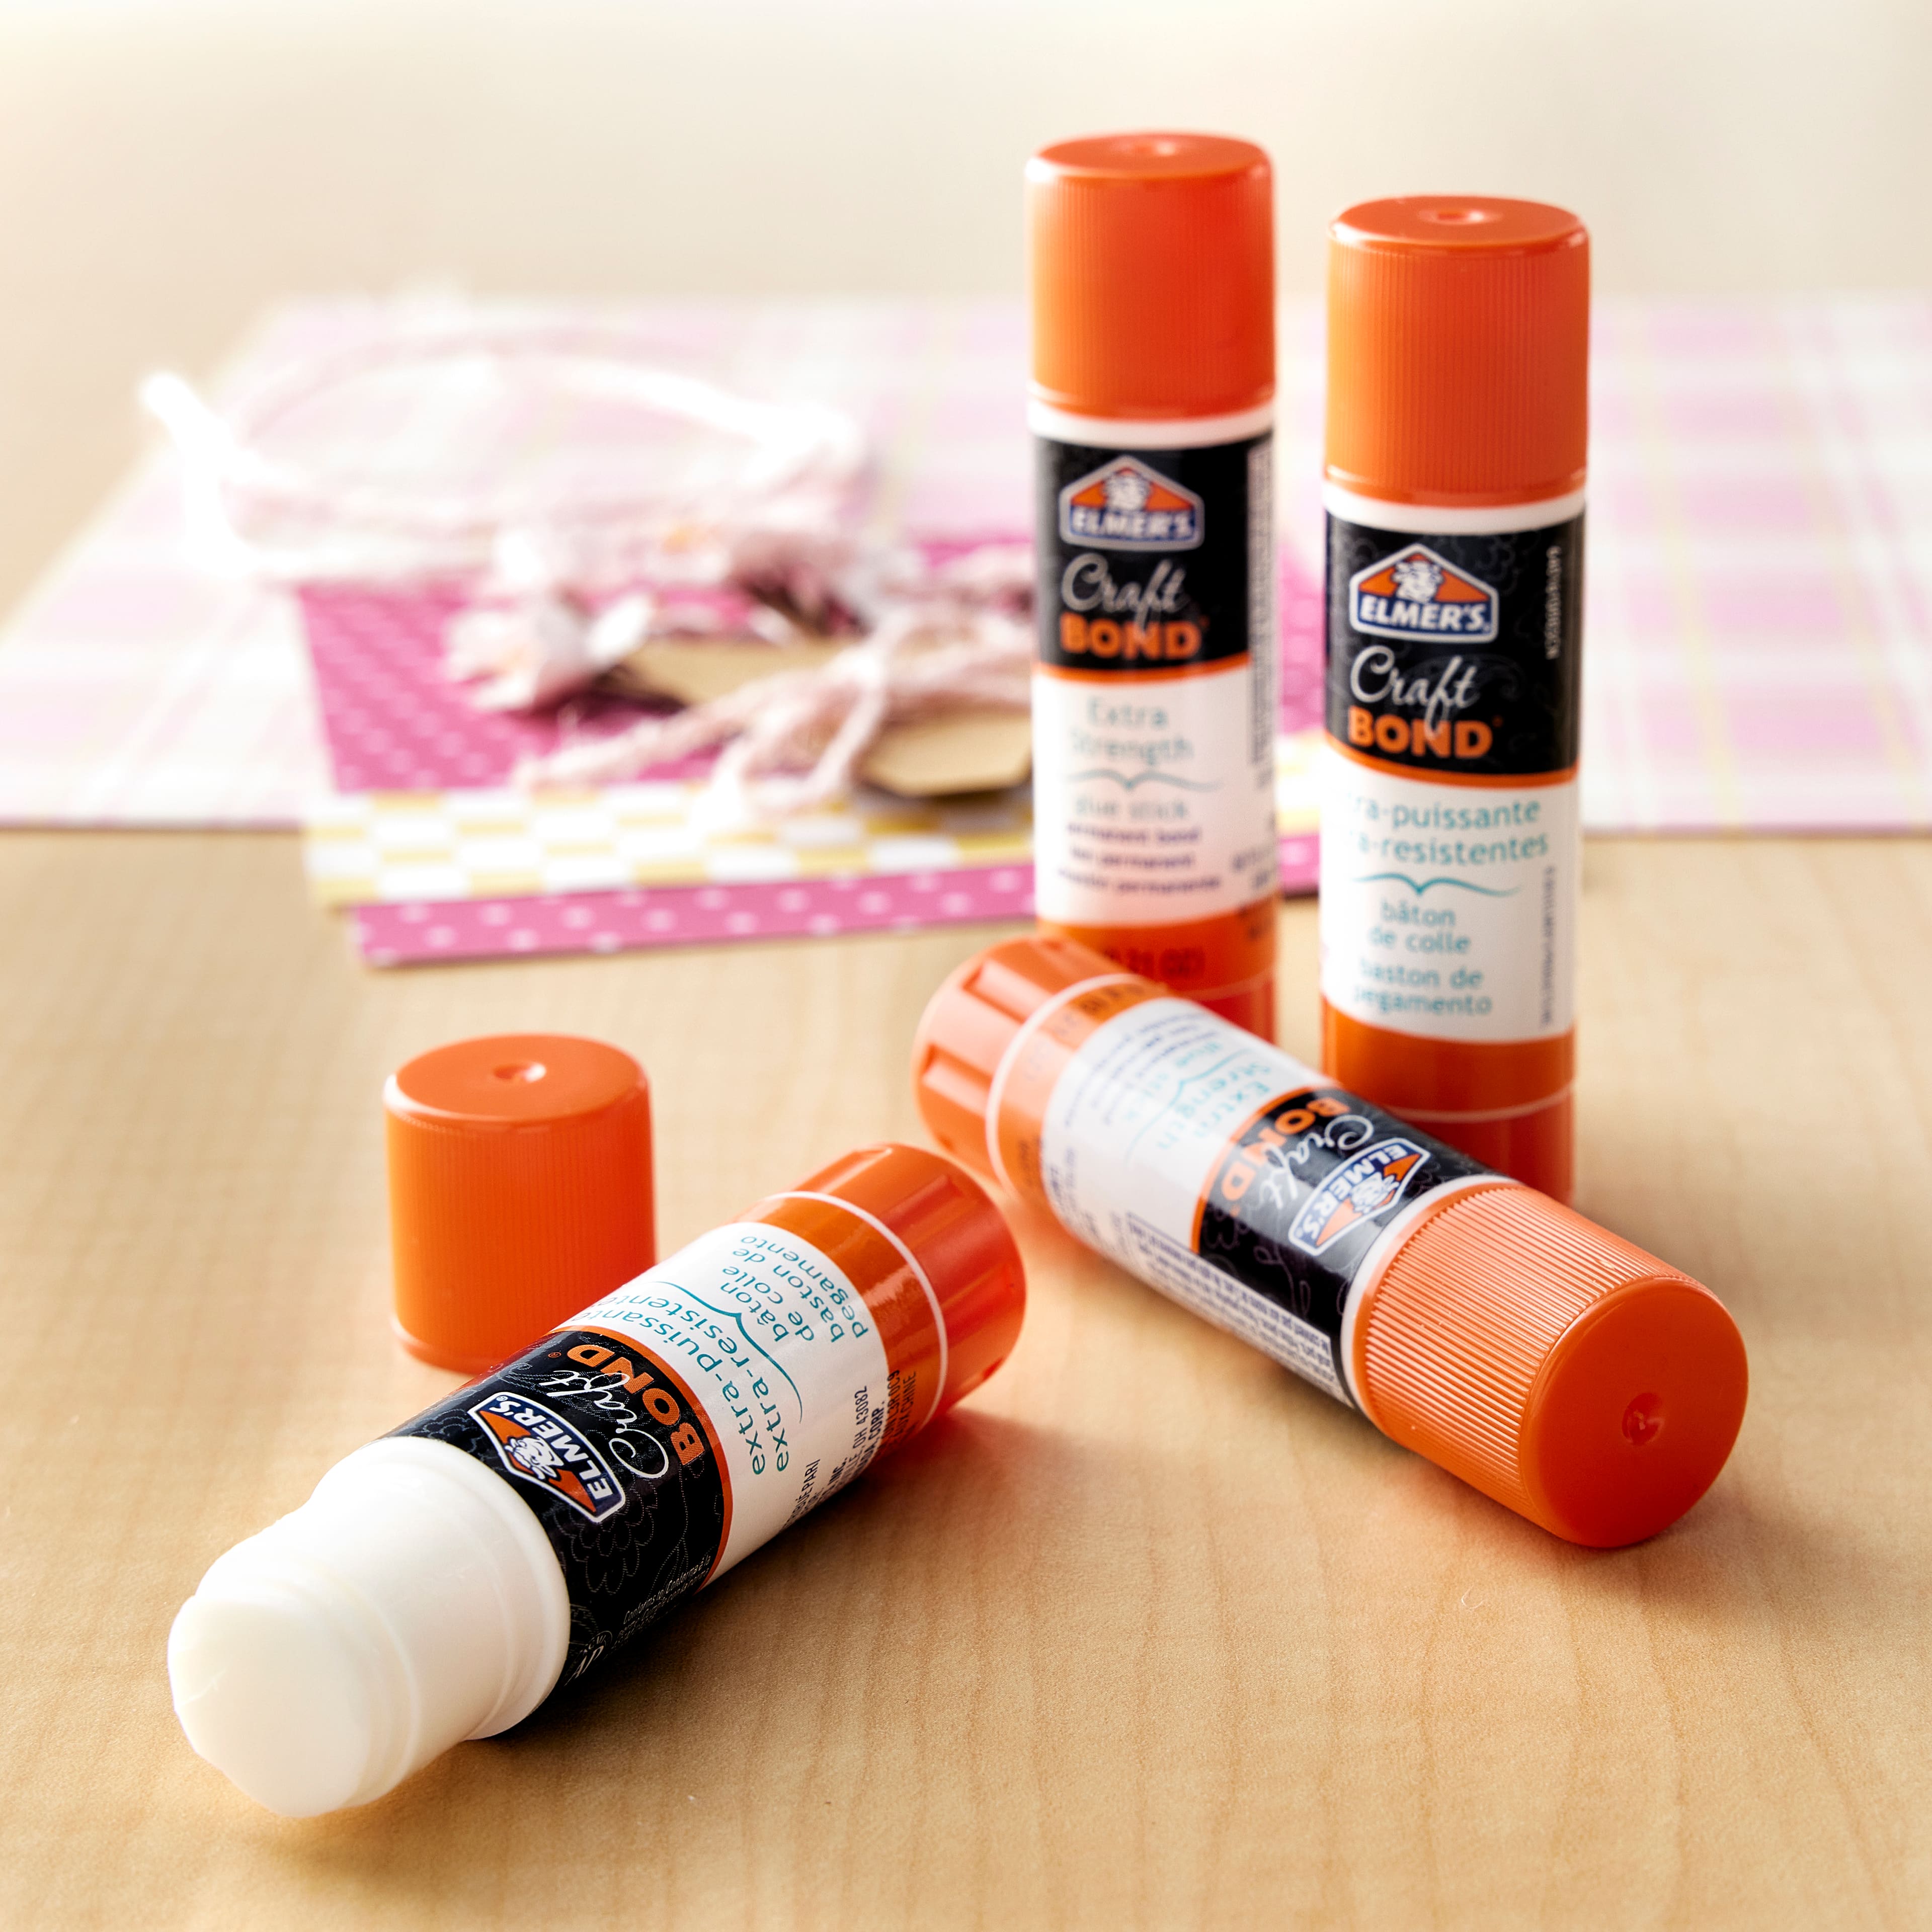 Elmer's® CraftBond® All-Temperature Mini Glue Sticks, 24 pk - Kroger